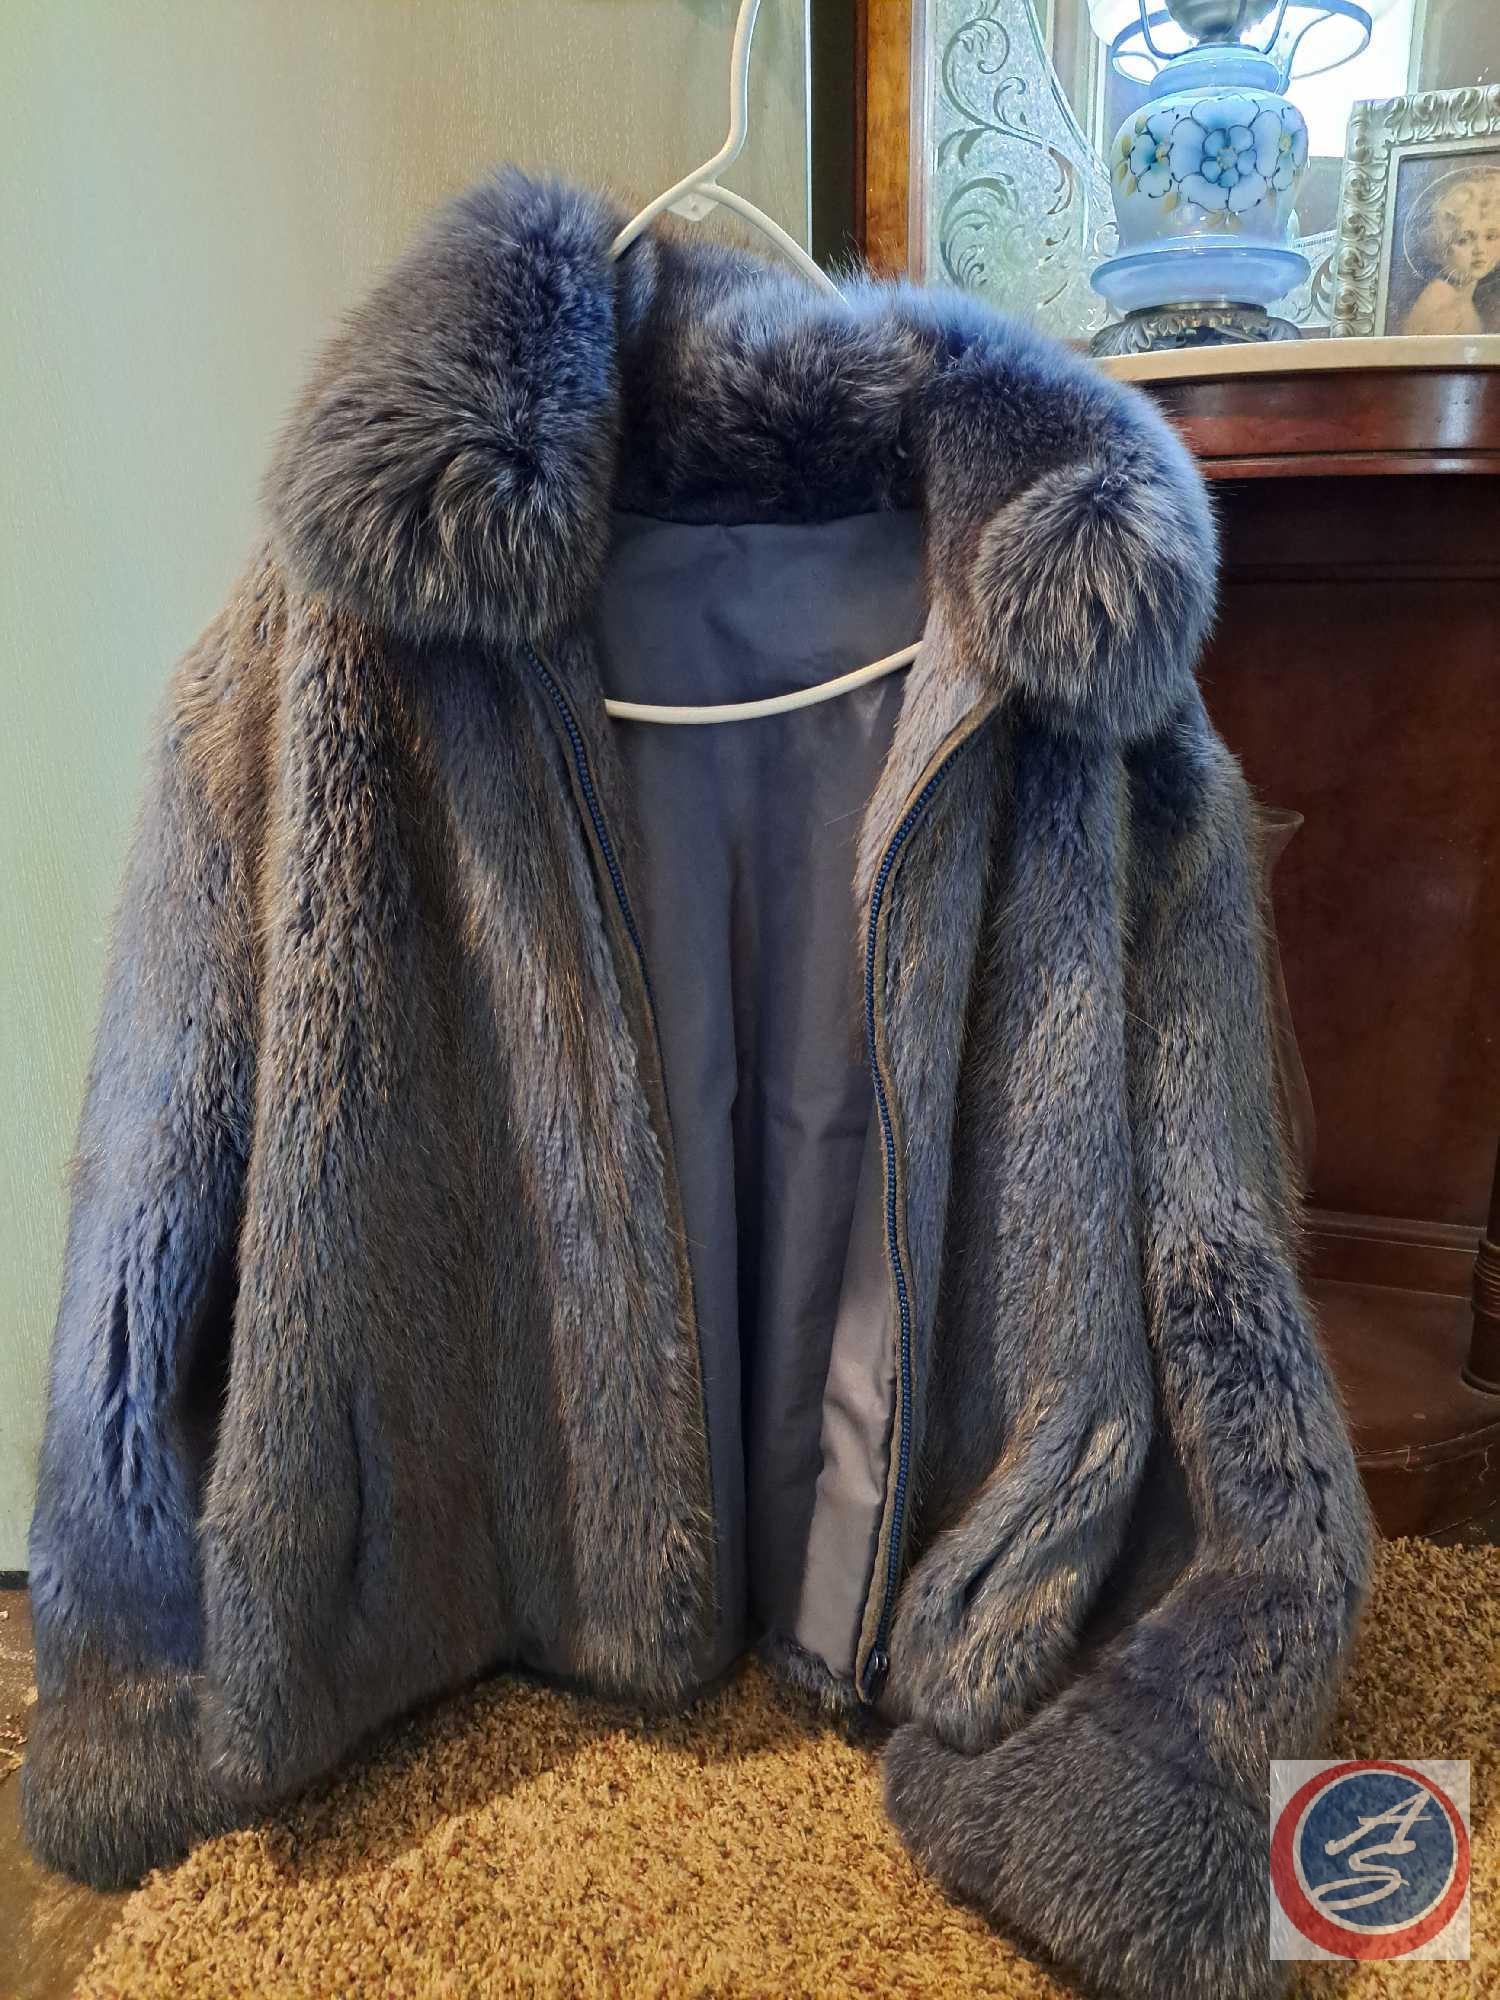 Assorted Coats see pictures , Avanti suede Jacket, Short Fur Coat, Short Fur Coat with Zipper, Long